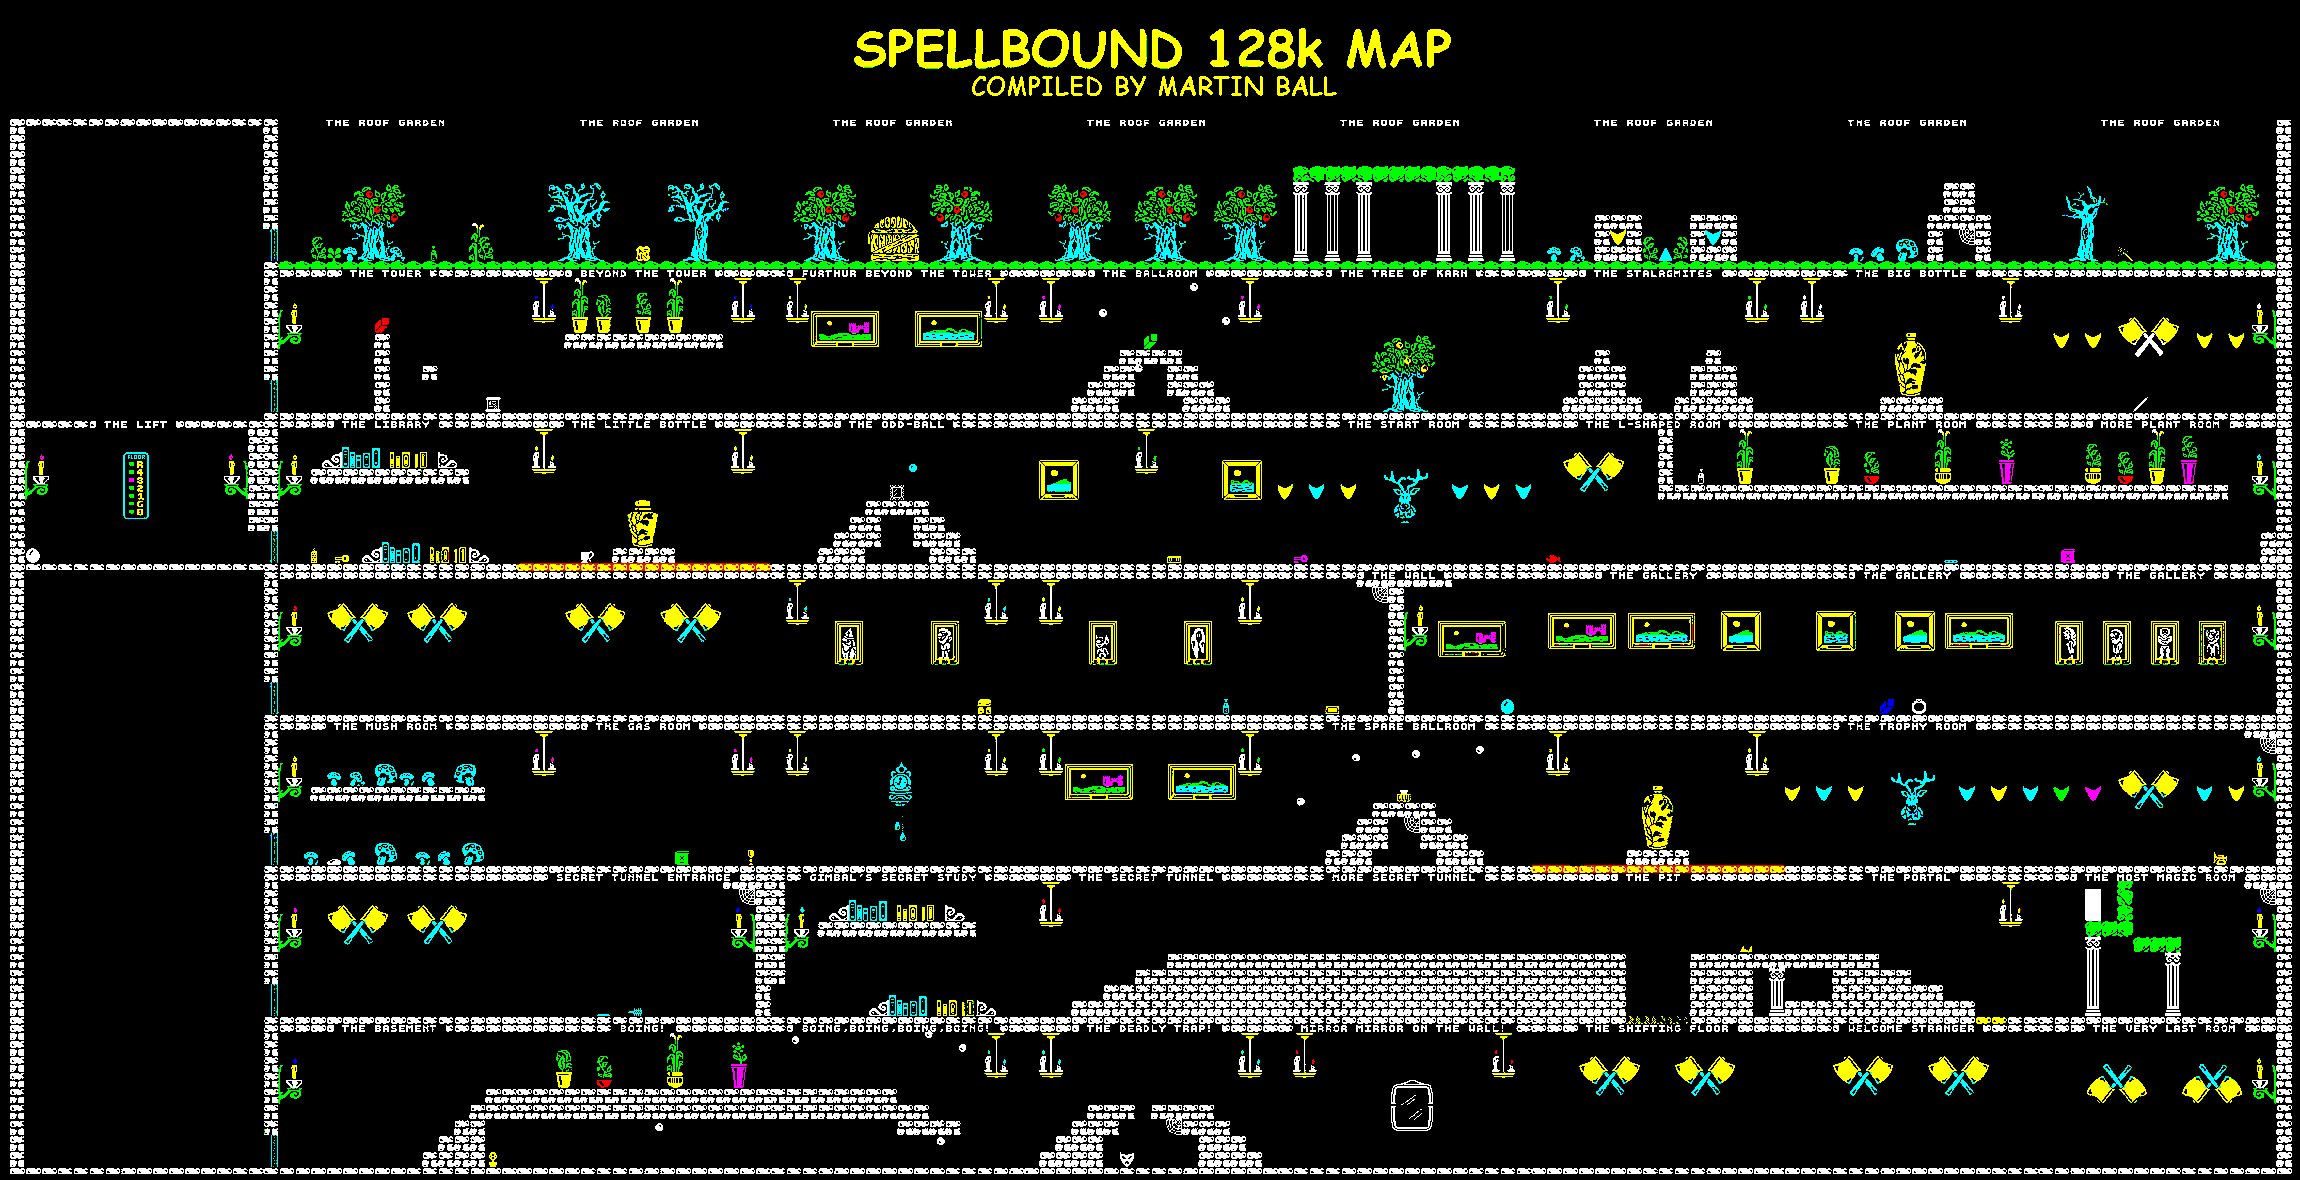 Spellbound 128K - The Map